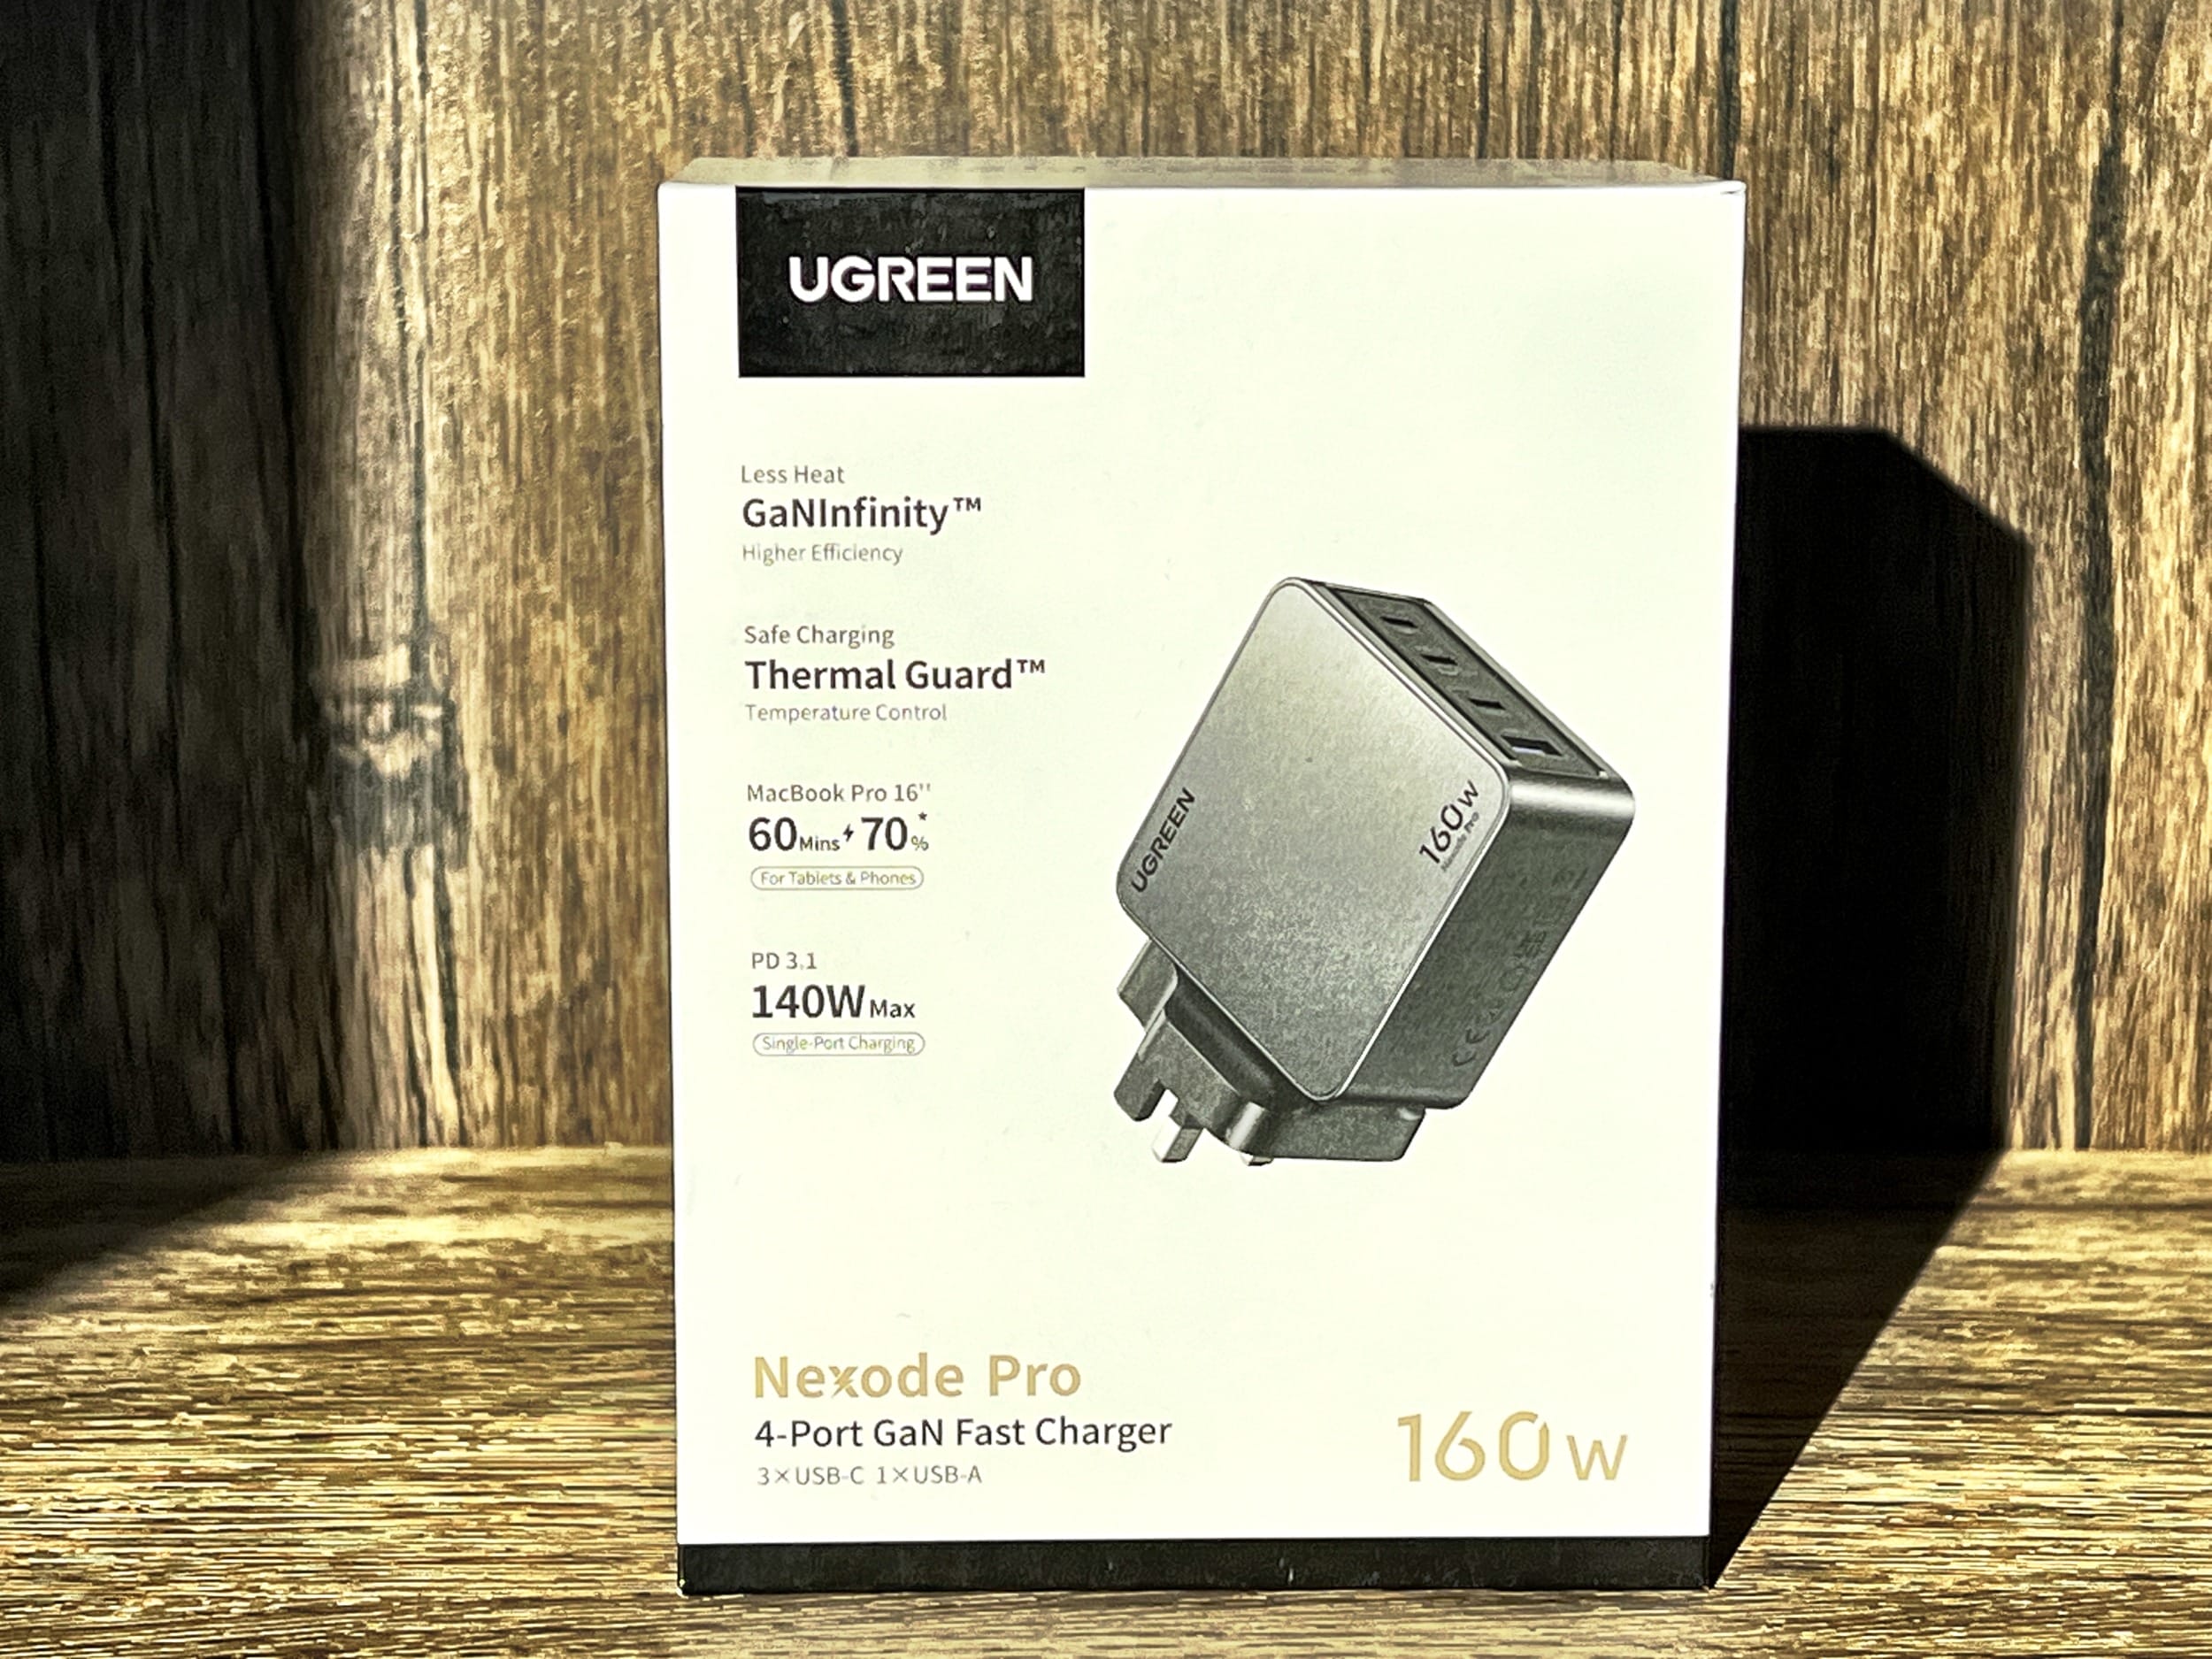 UGREEN unveils new Nexode Pro 160W 4-Port GaN Fast Charger -   News